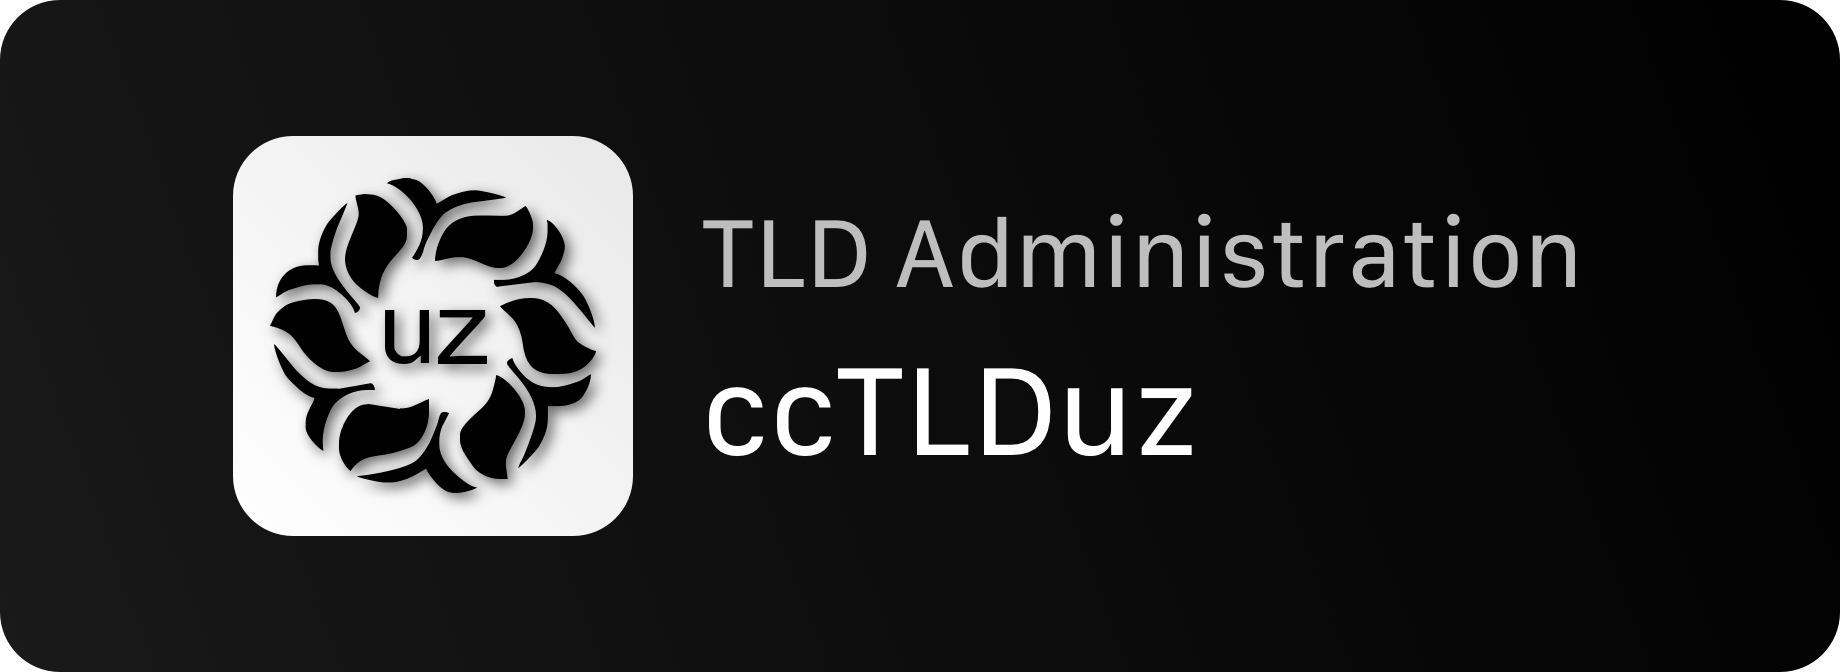 ccTLDuz Administration